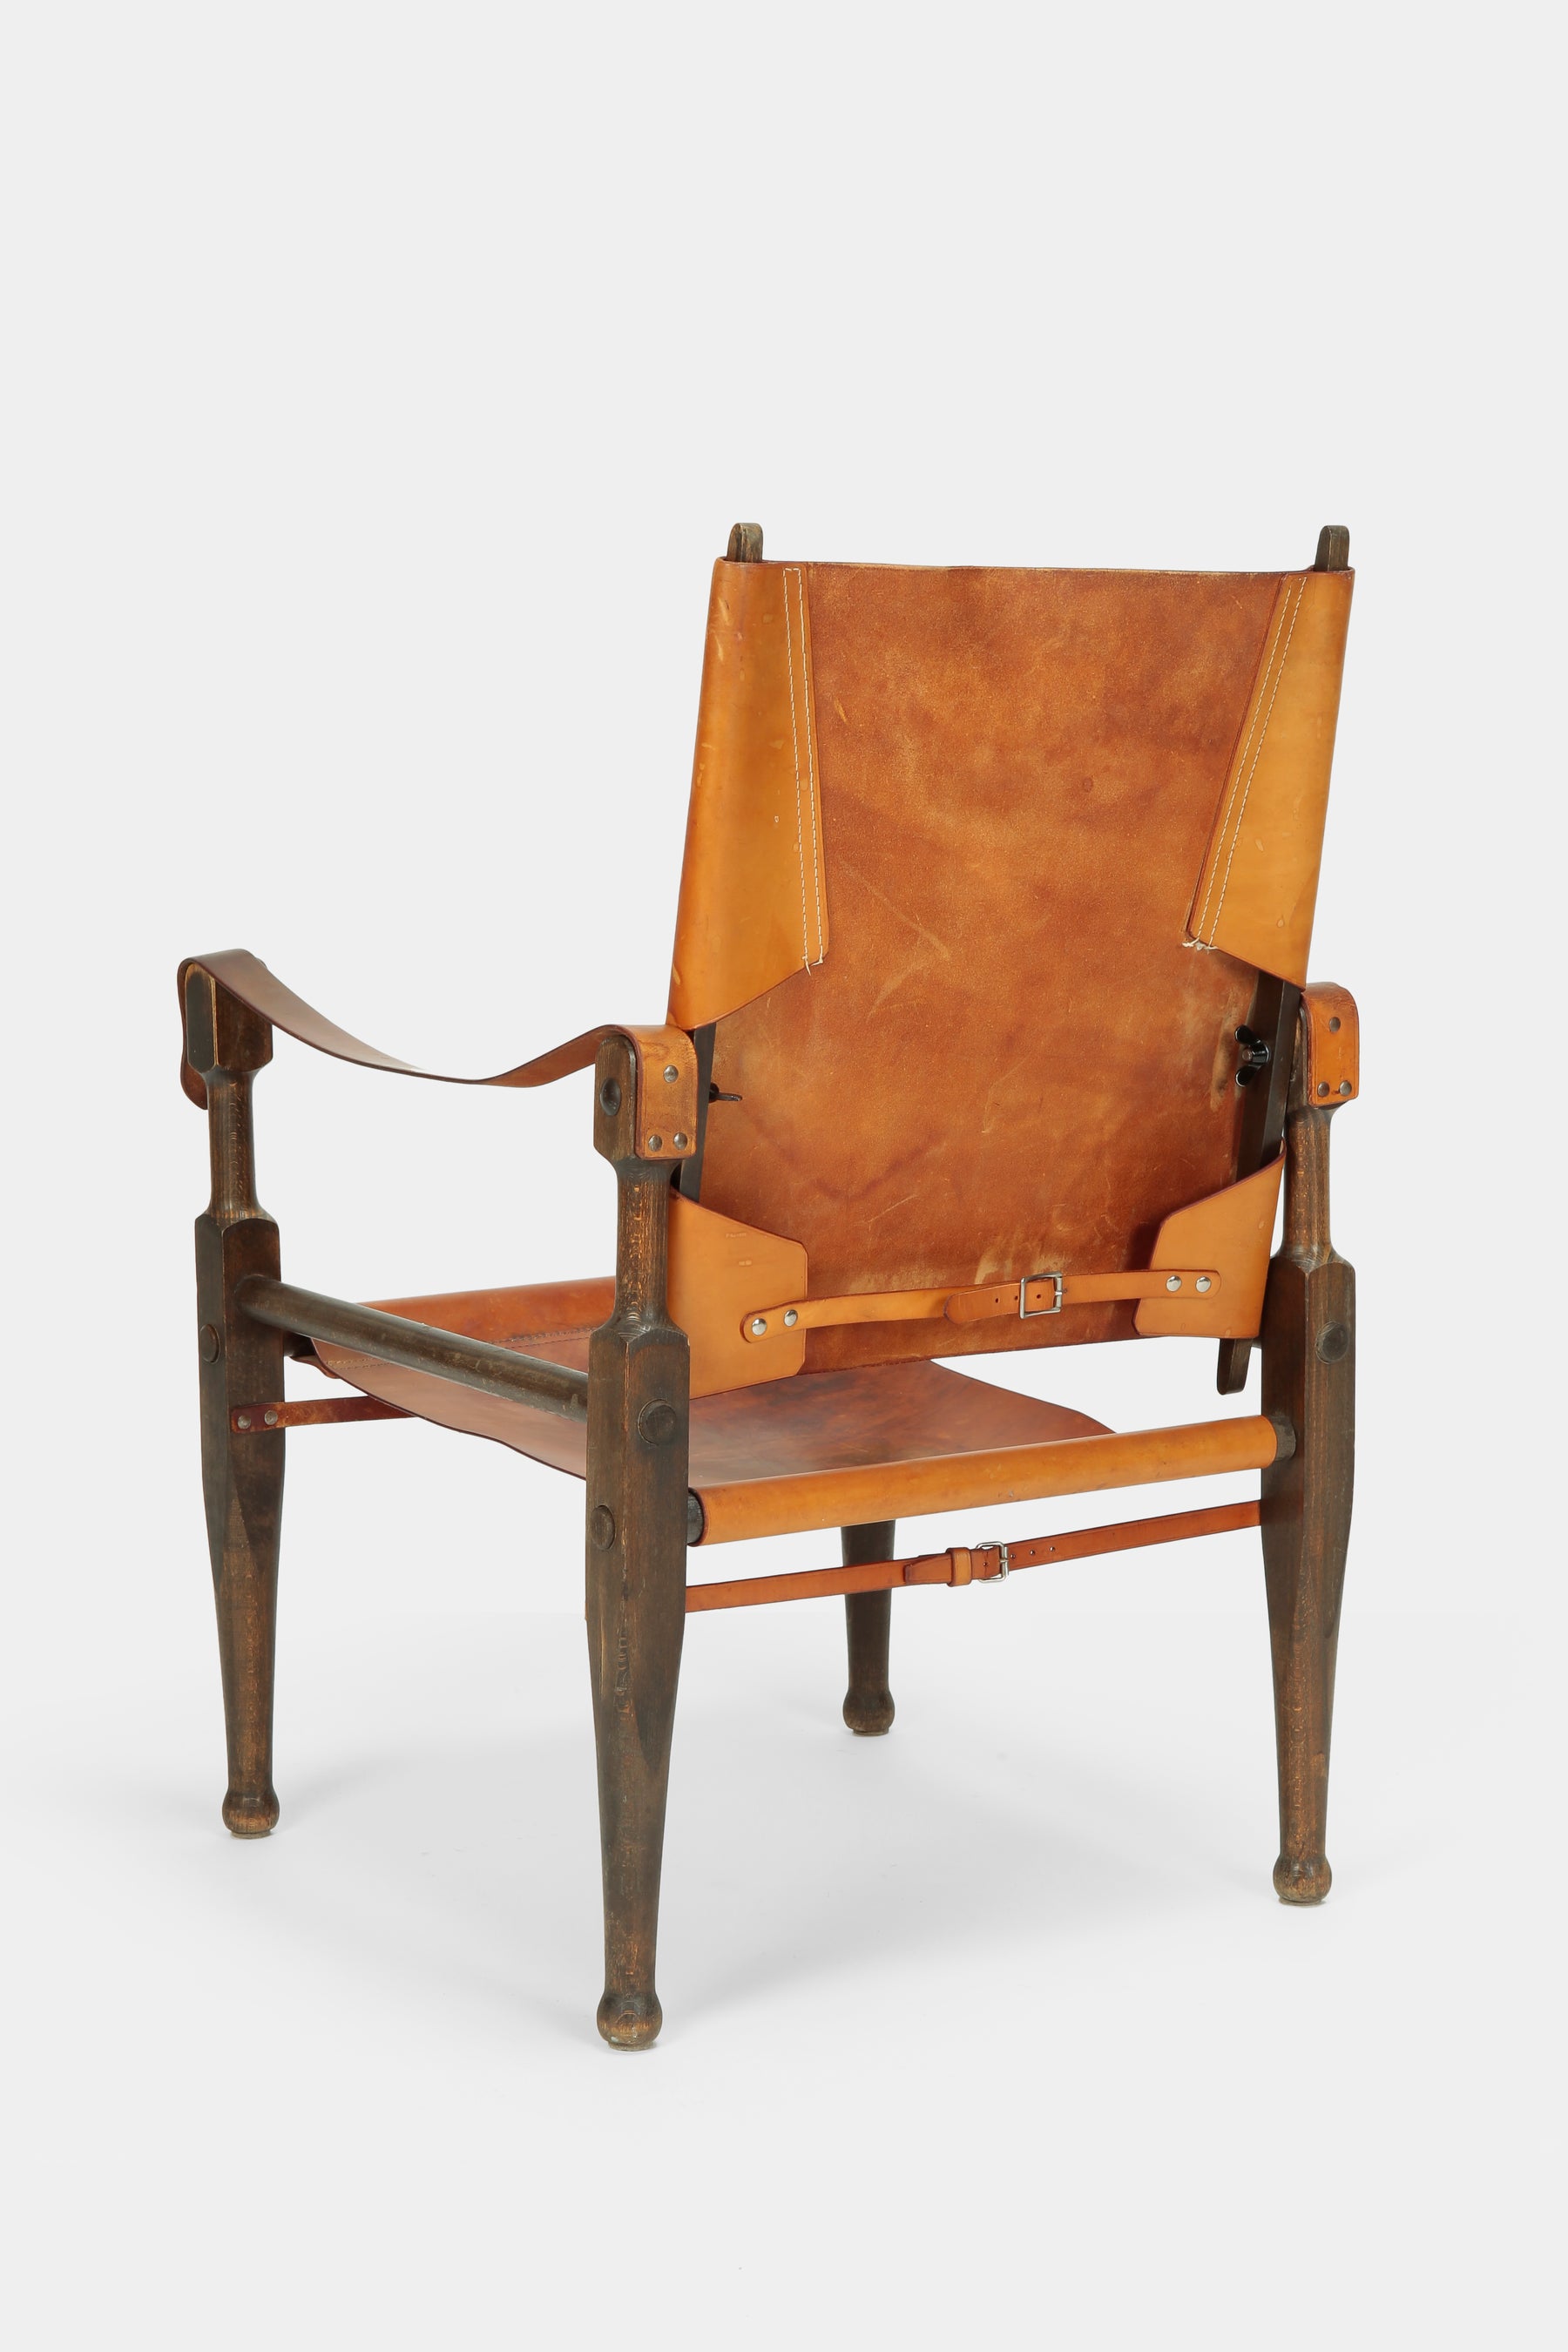 2 Wilhelm Kienzle Safari Chairs, Wohnbedarf, 50er